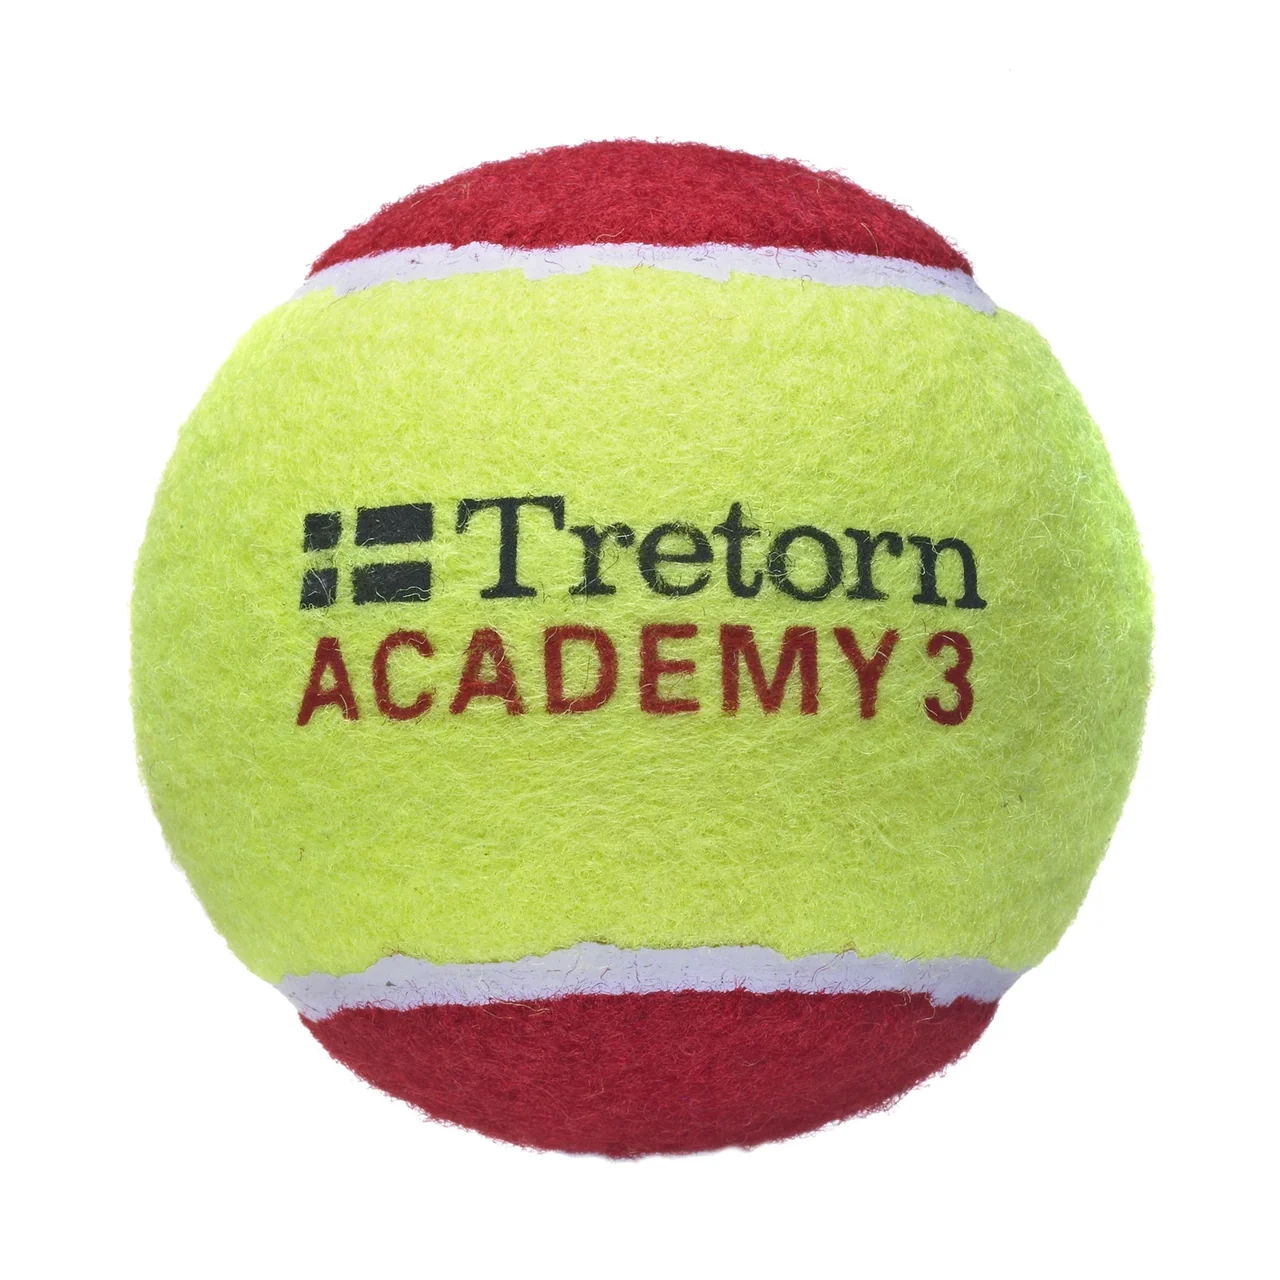 Tretorn Academy Redfelt 36 bolde